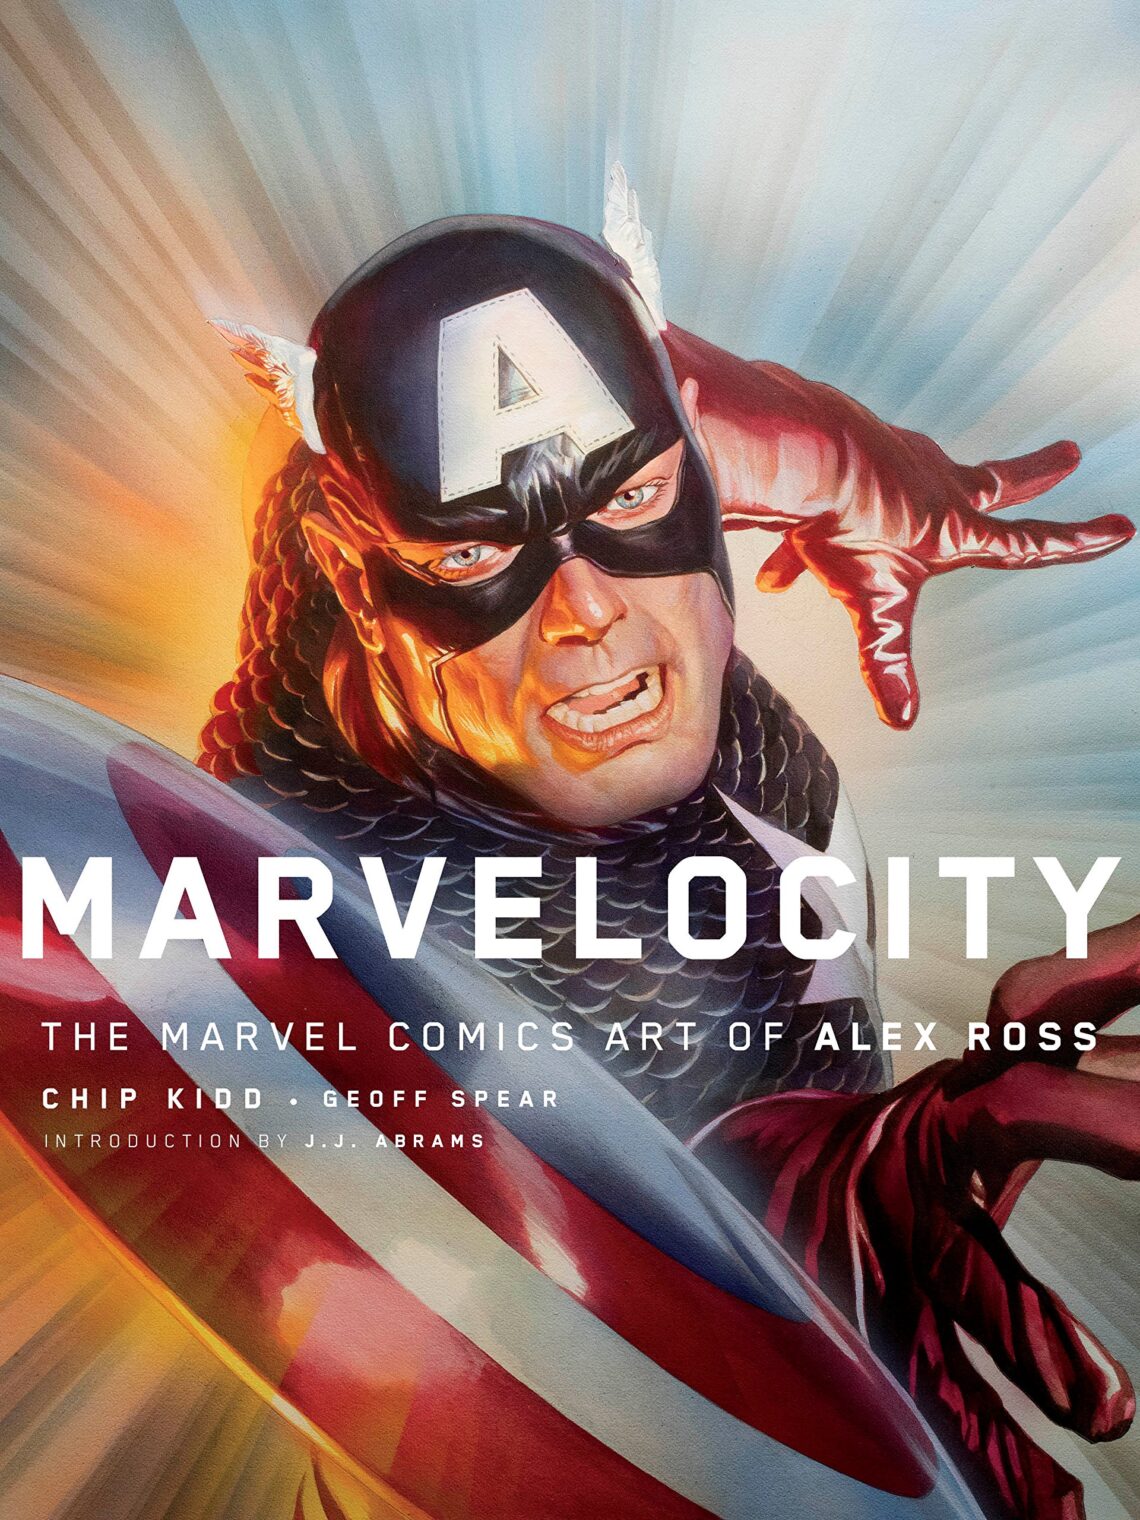 Marvelocity The Marvel Comics Art of Alex Ross Review